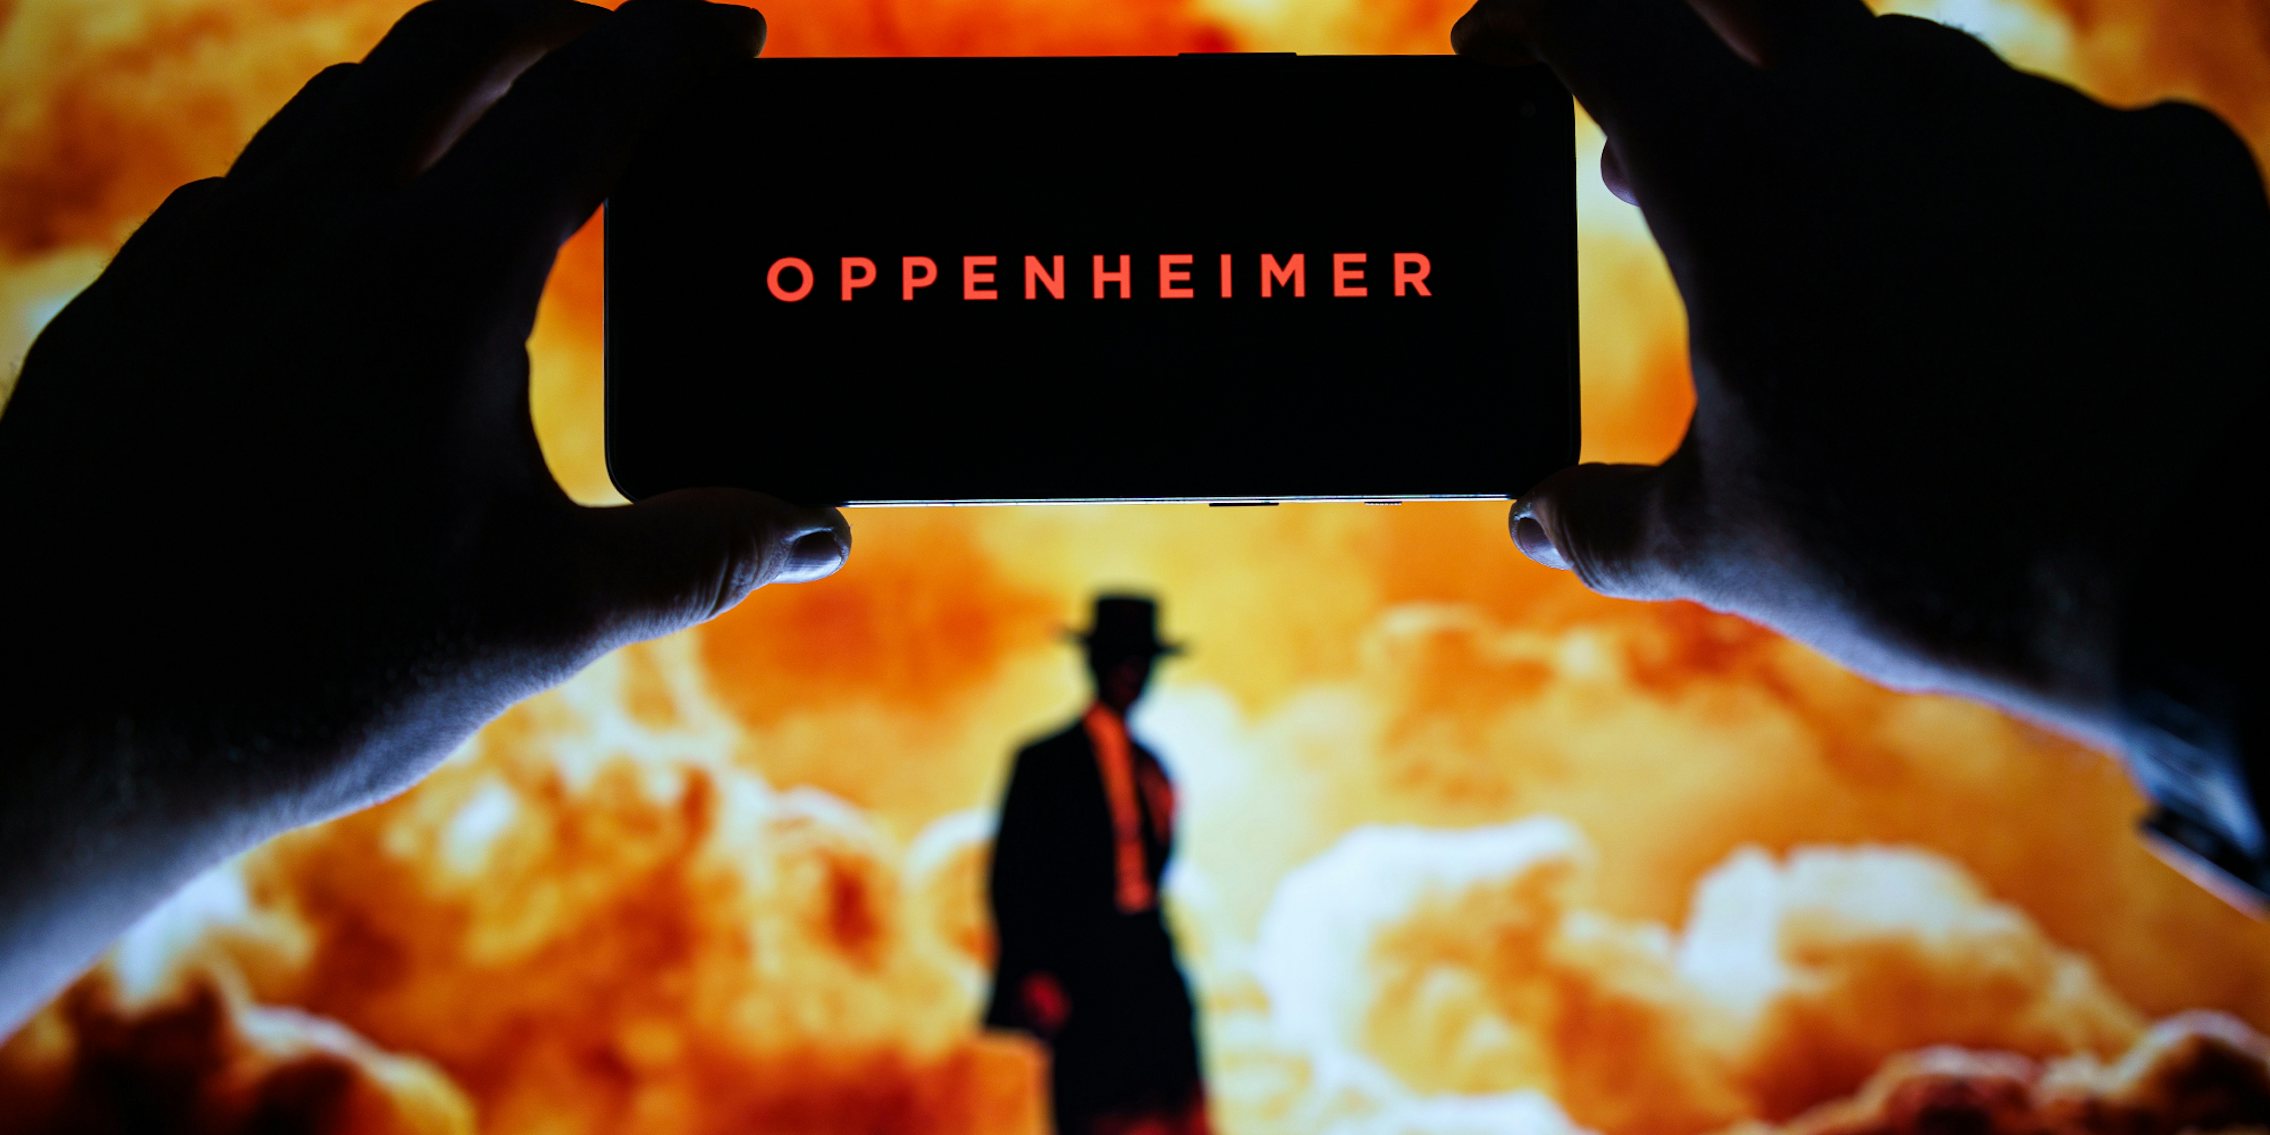 Oppenheimer movie logo and poster on screen.